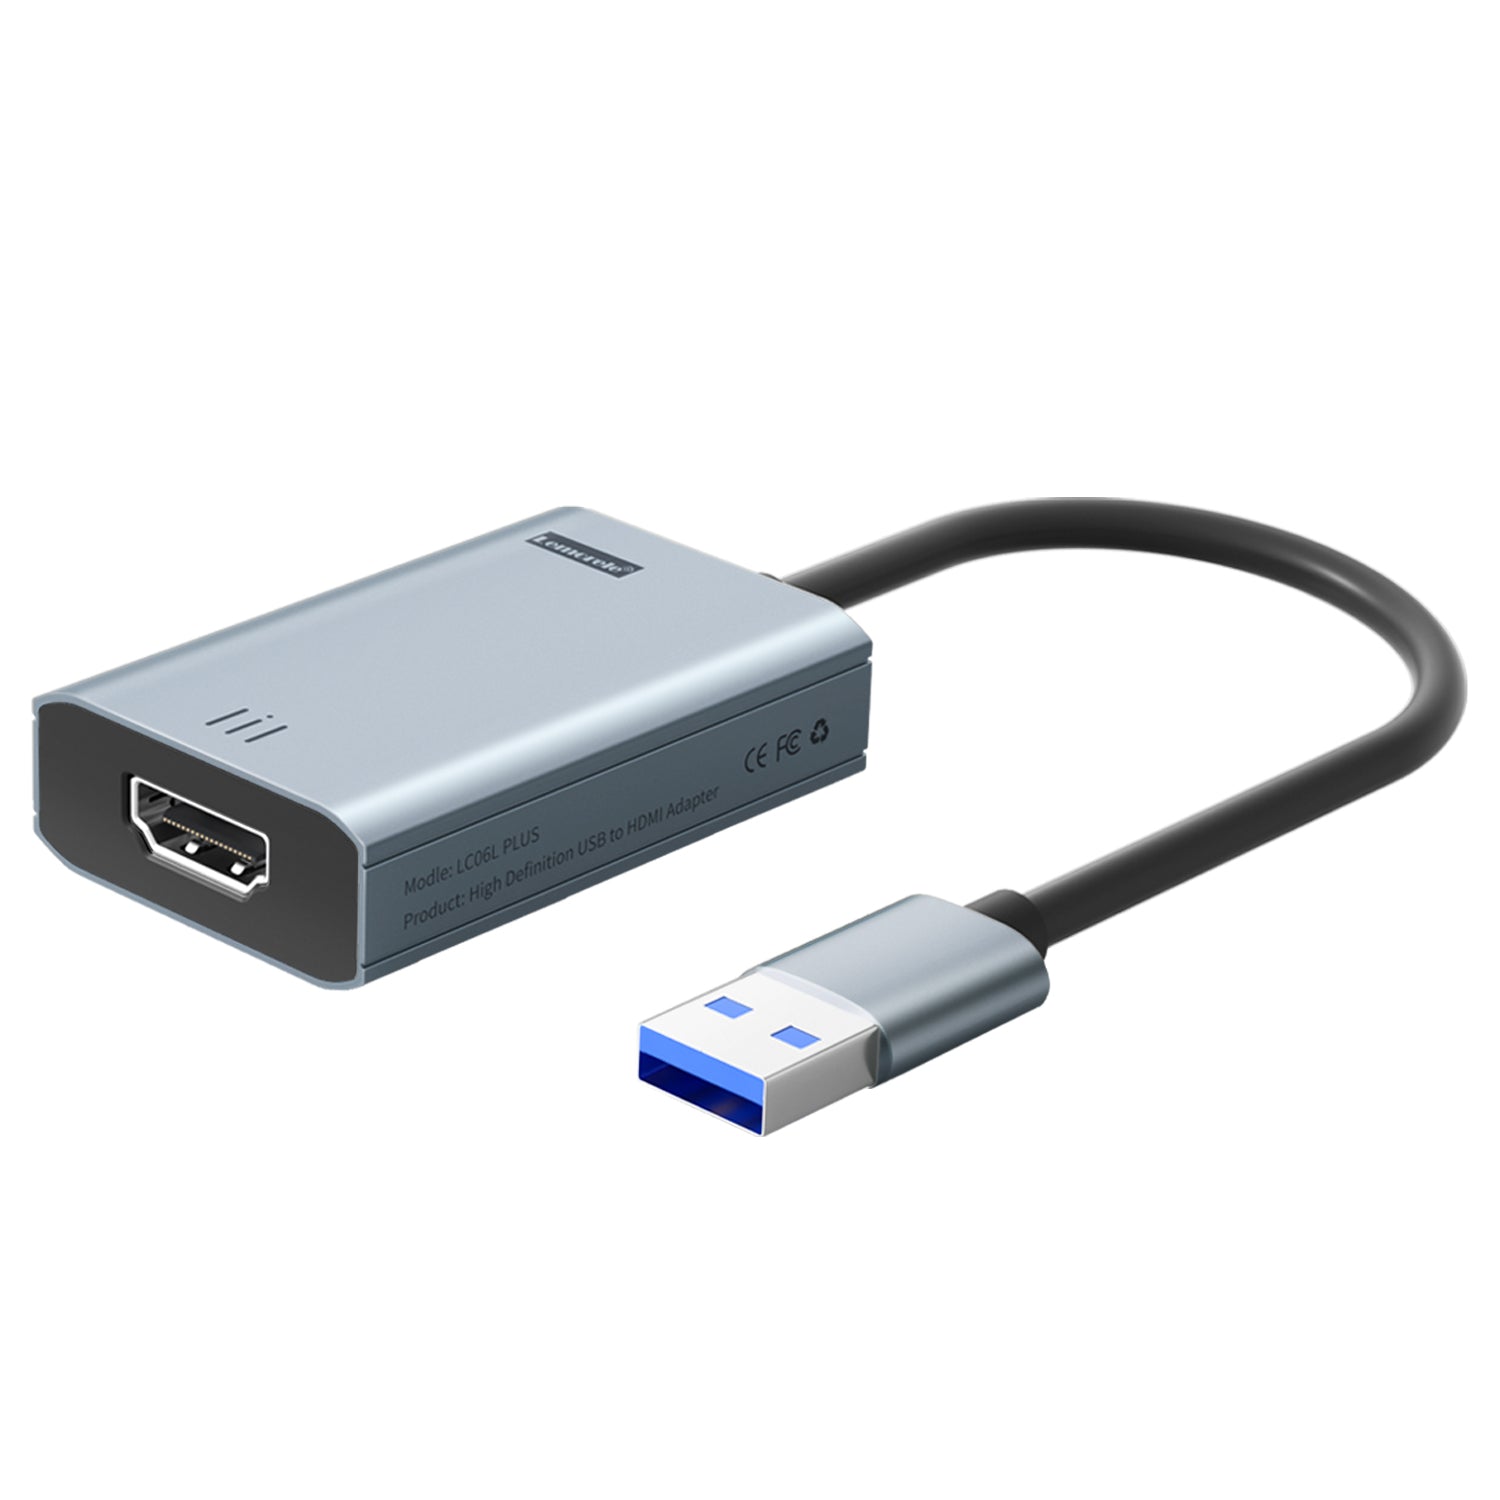 Lemorele USB to HDMI Adapter【LC06 plus】